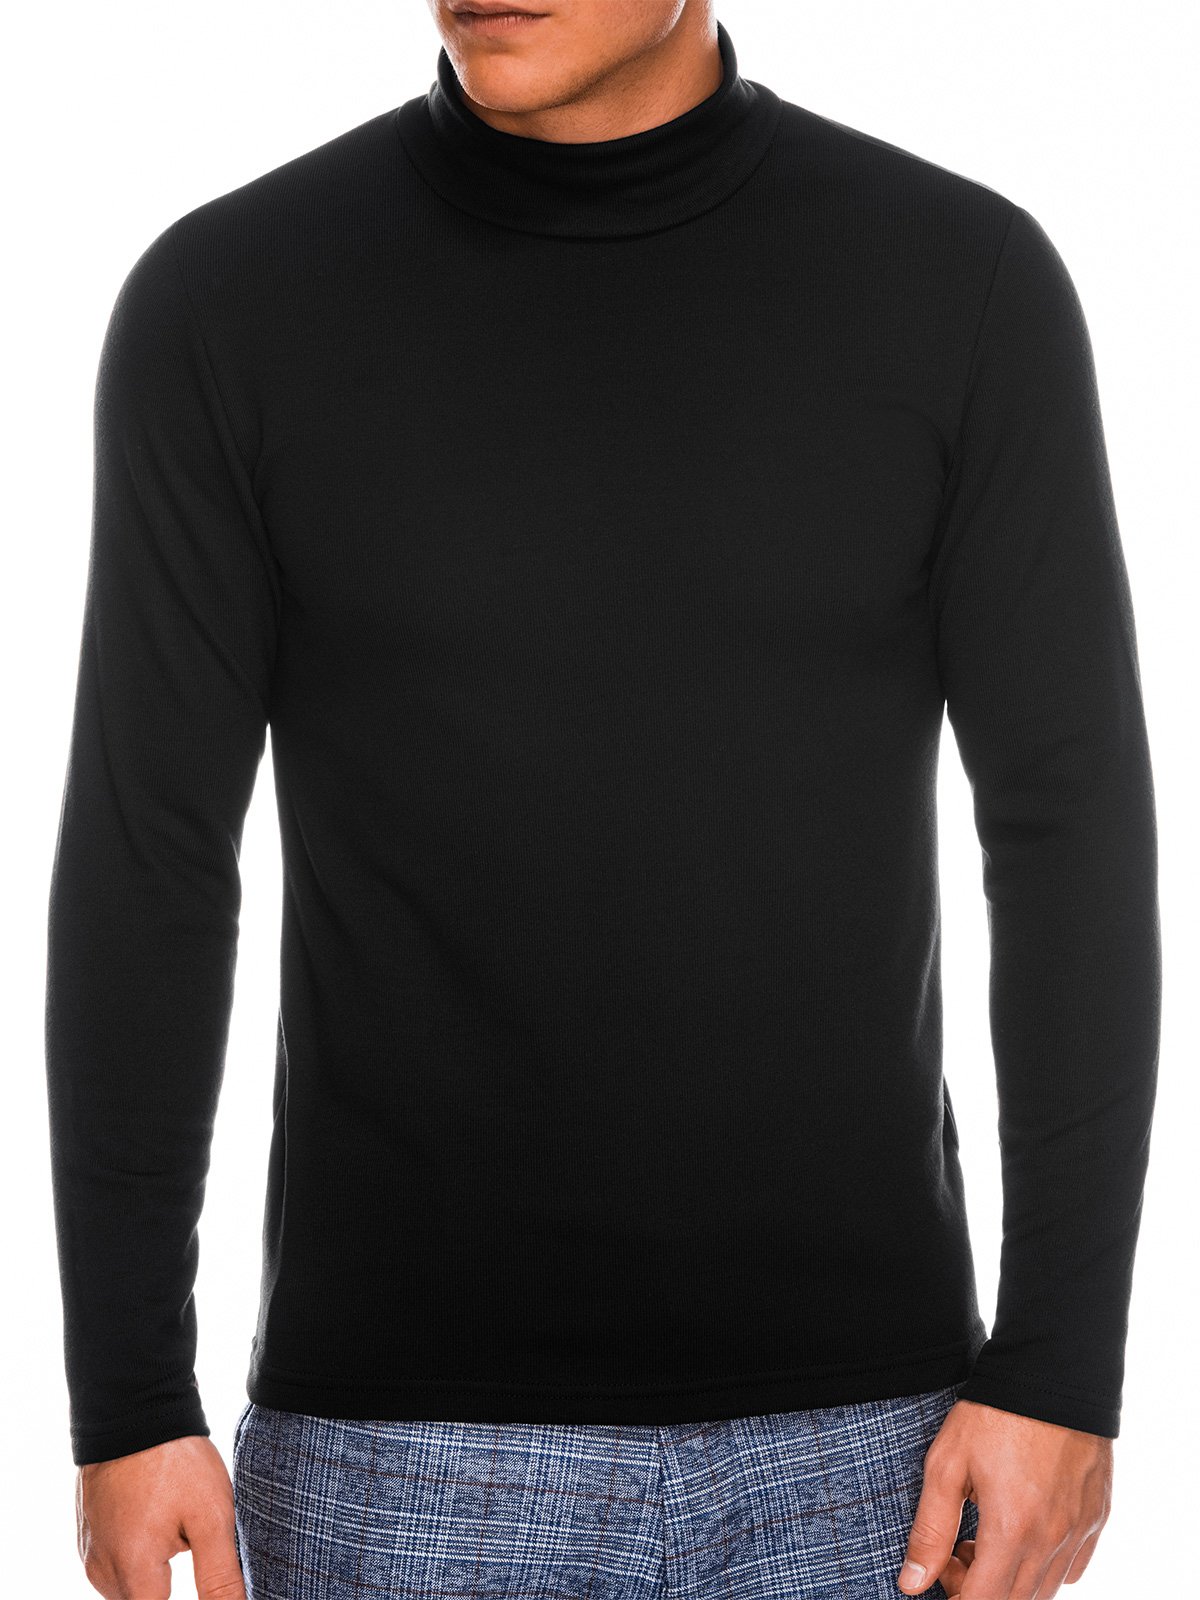 Men's polo neck B1009 - black | MODONE wholesale - Clothing For Men